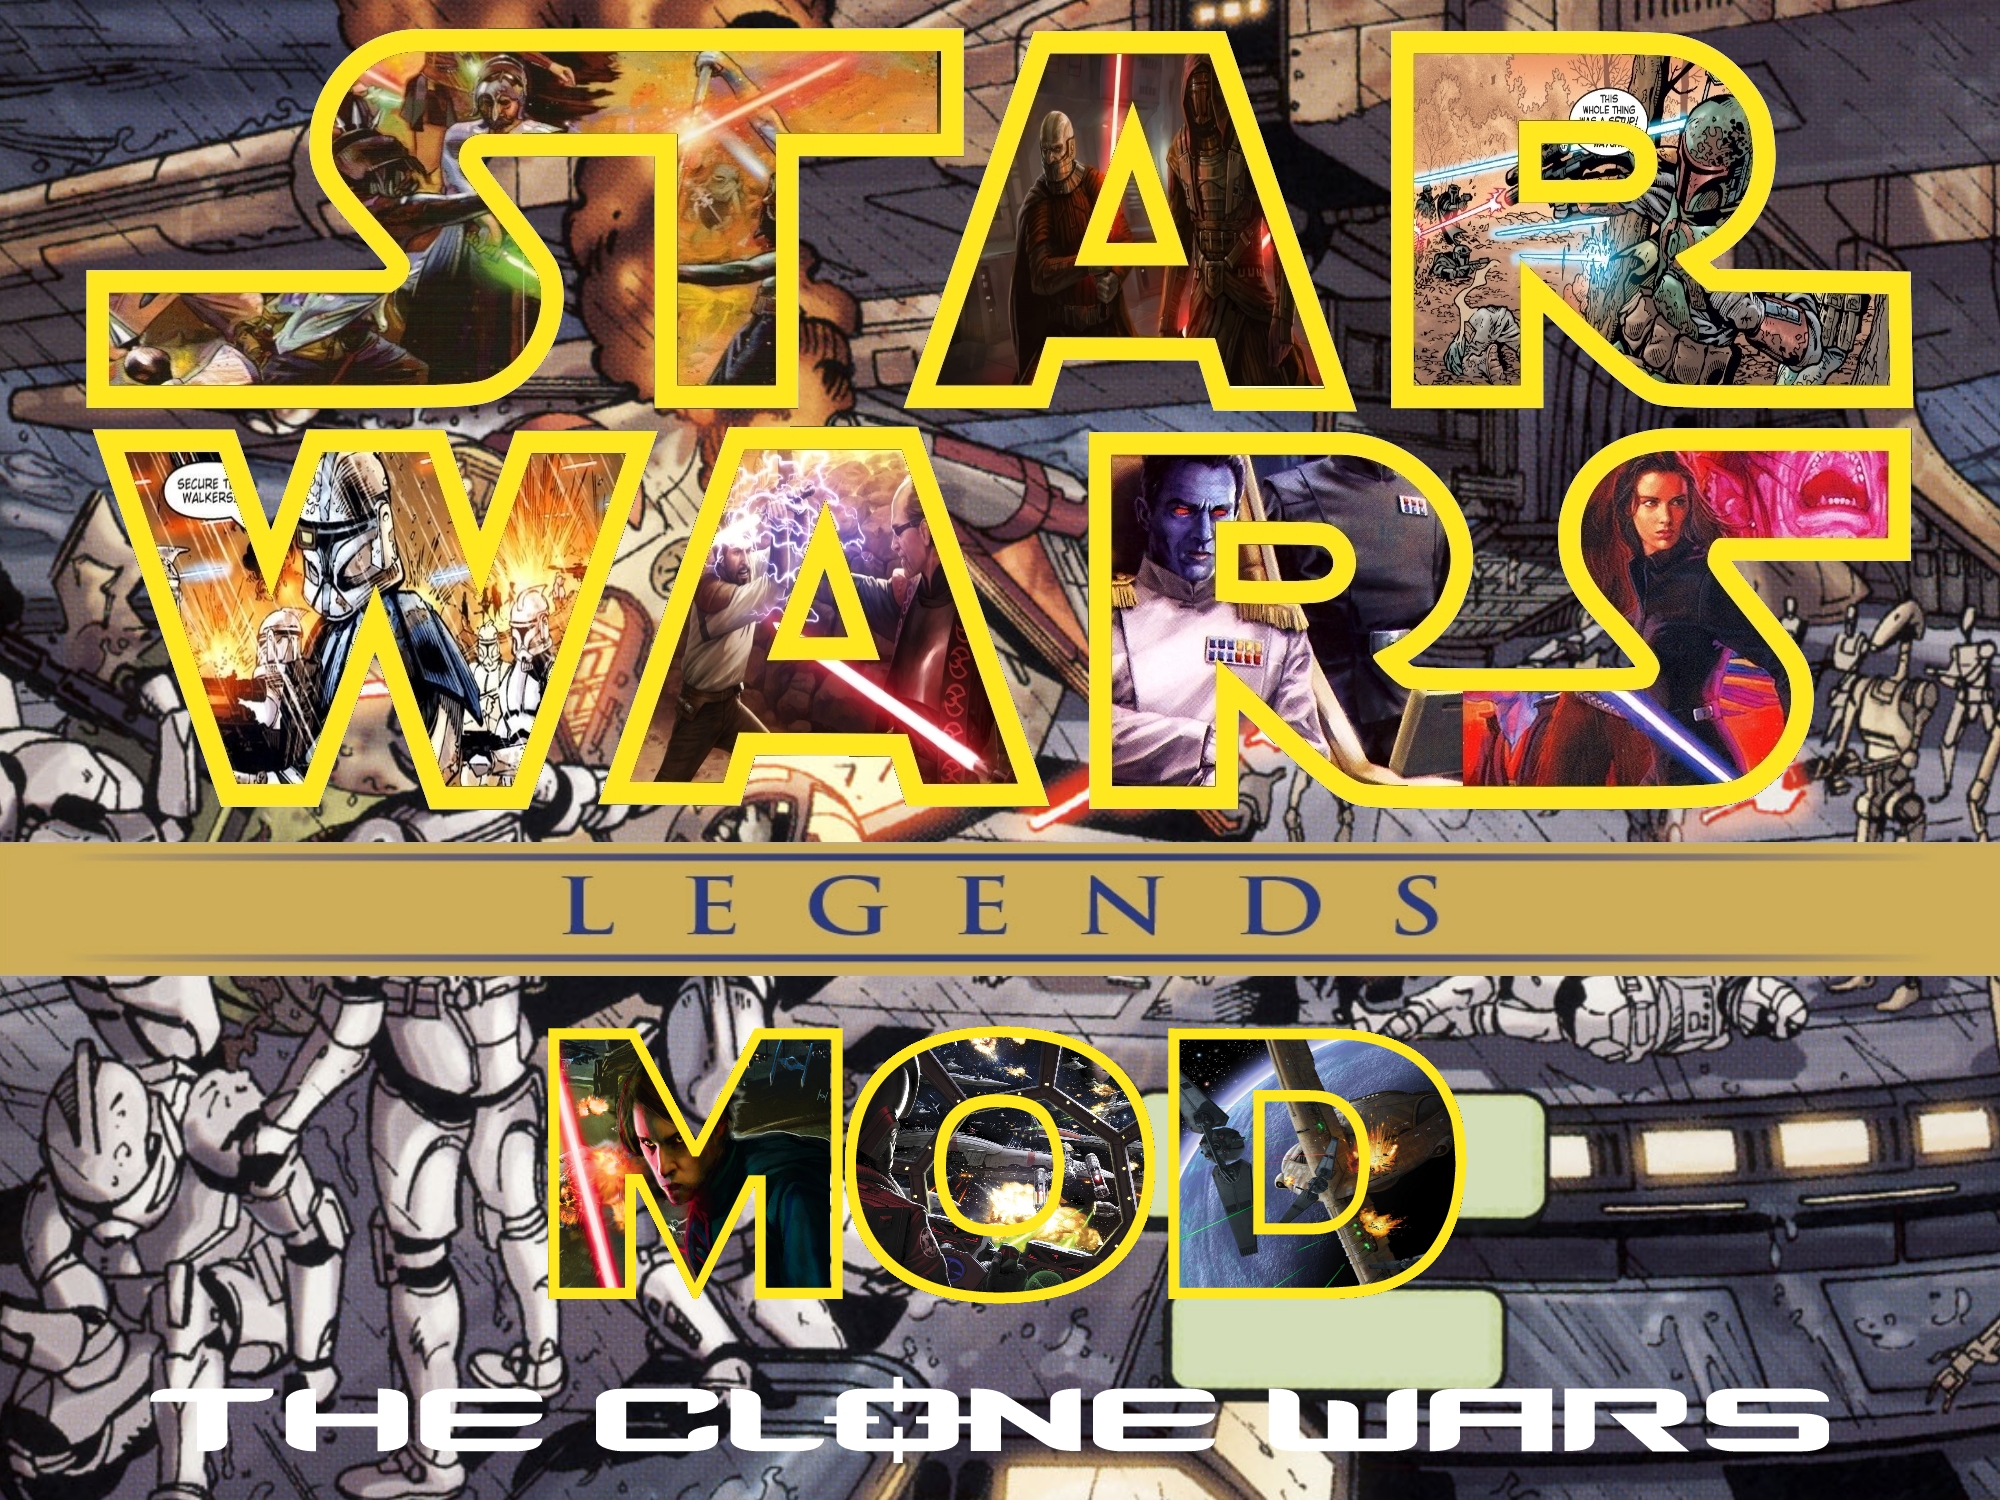 Clone wars empire at war mod